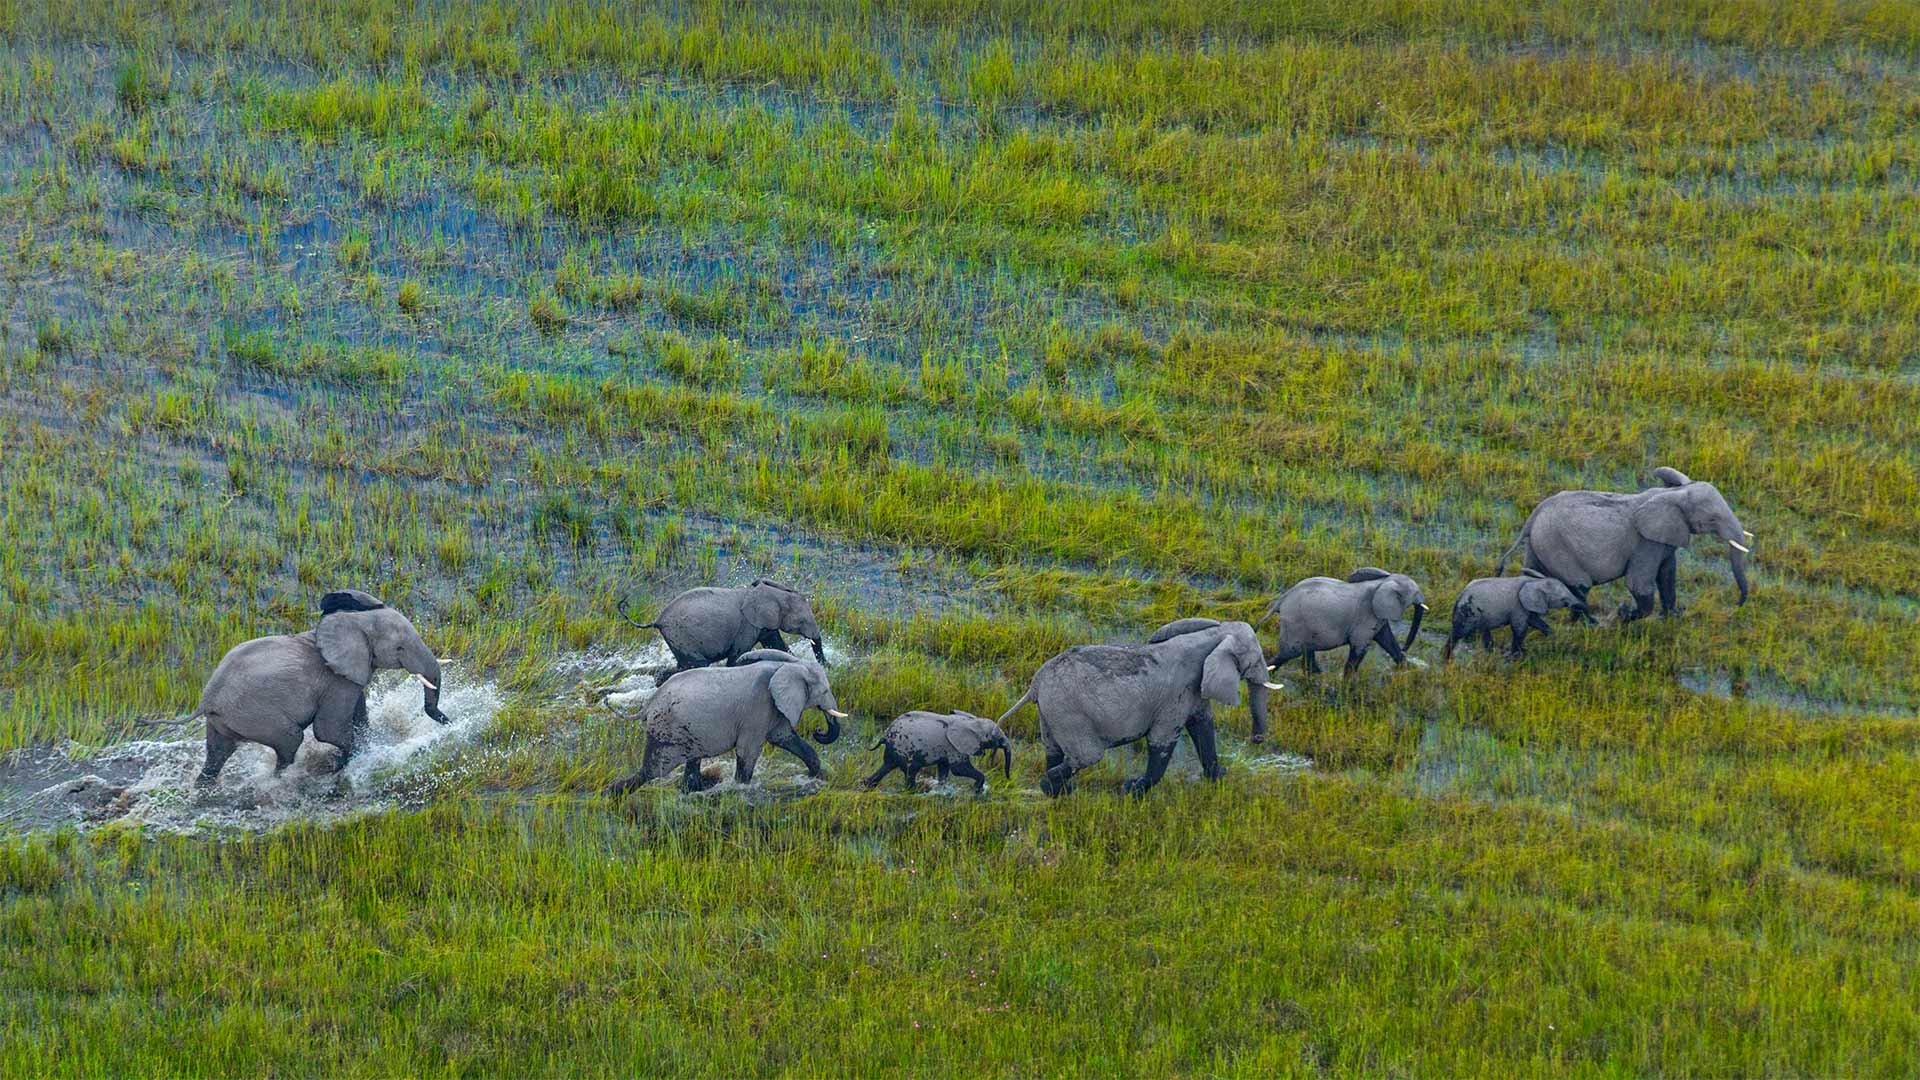 African bush elephant herd, Okavango Delta, Botswana - Juan-Carlos Munoz